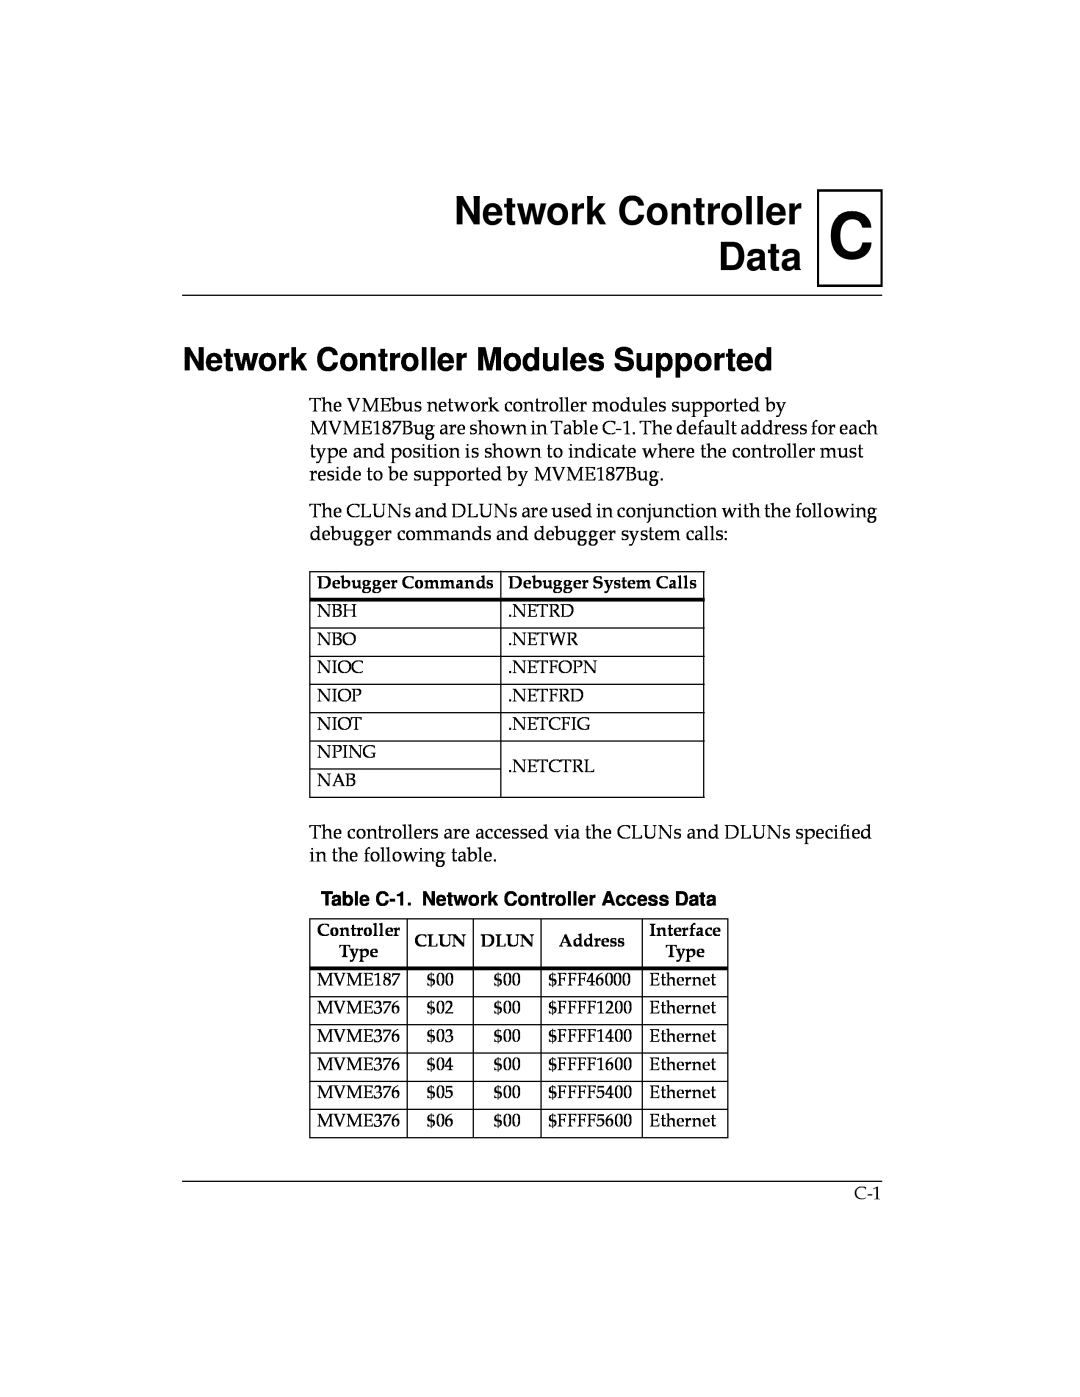 Motorola MVME187 CNetwork Controller Data, Network Controller Modules Supported, Table C-1. Network Controller Access Data 